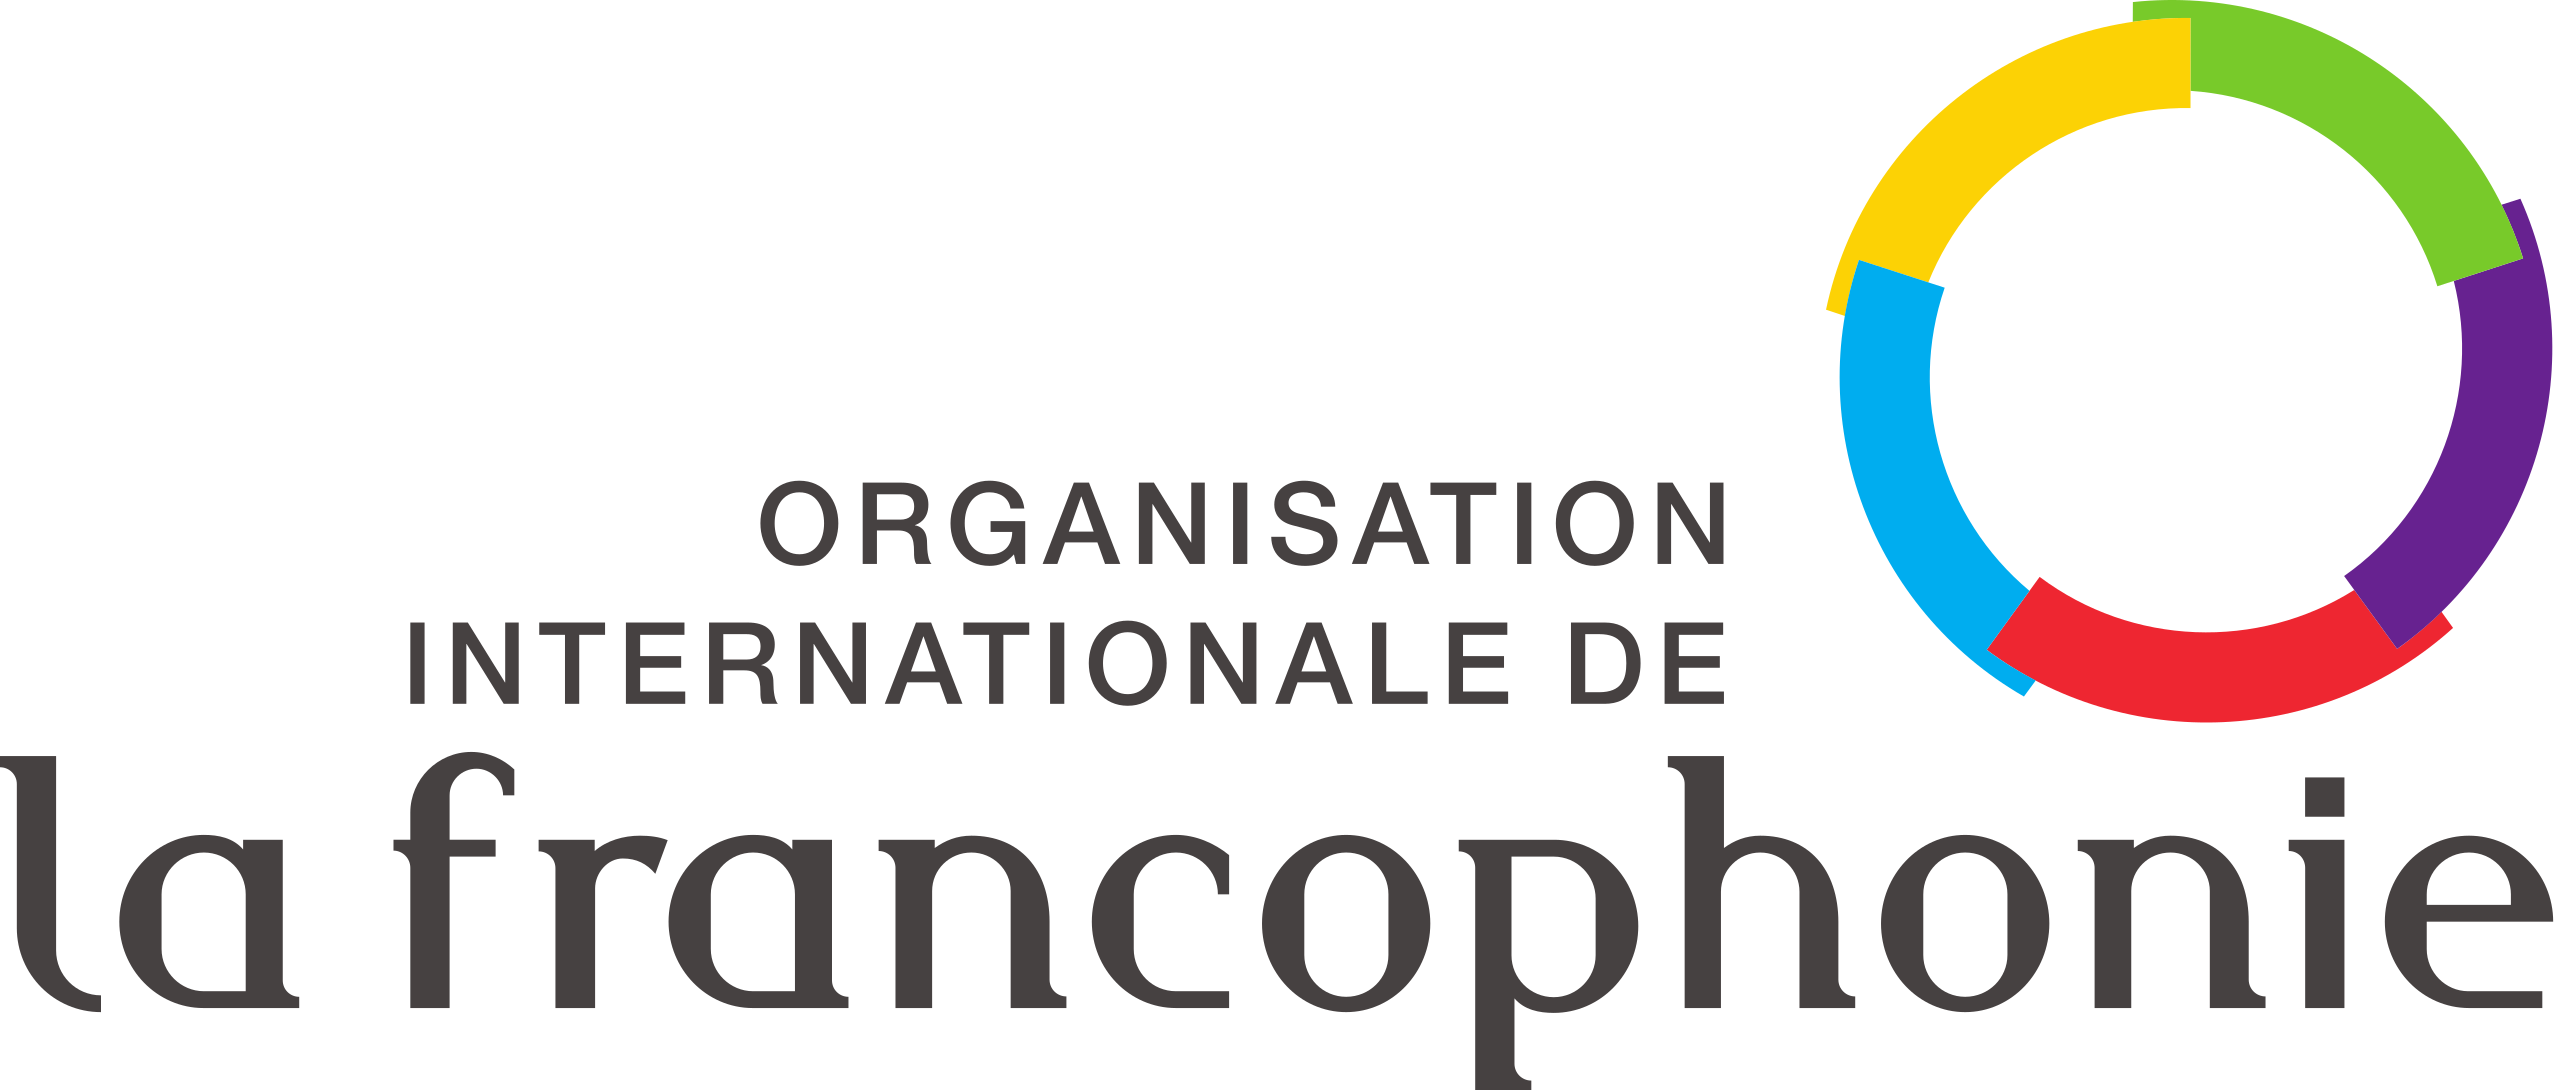 Francophonie company logo